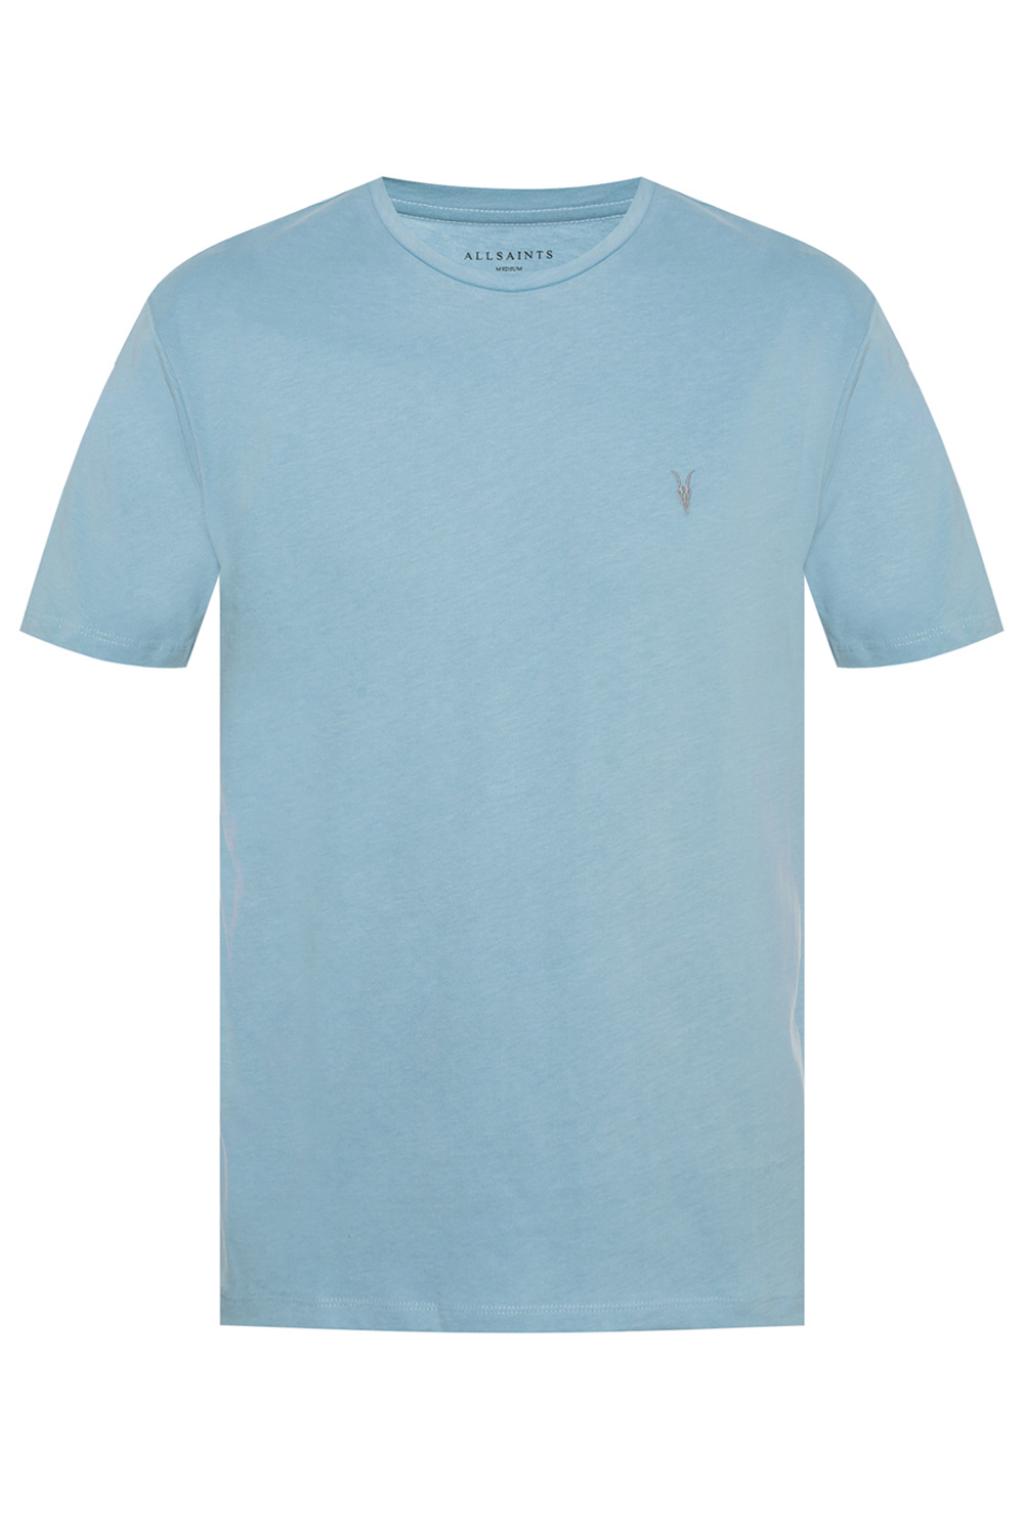 AllSaints ‘Brace’ T-shirt with logo | Men's Clothing | Vitkac